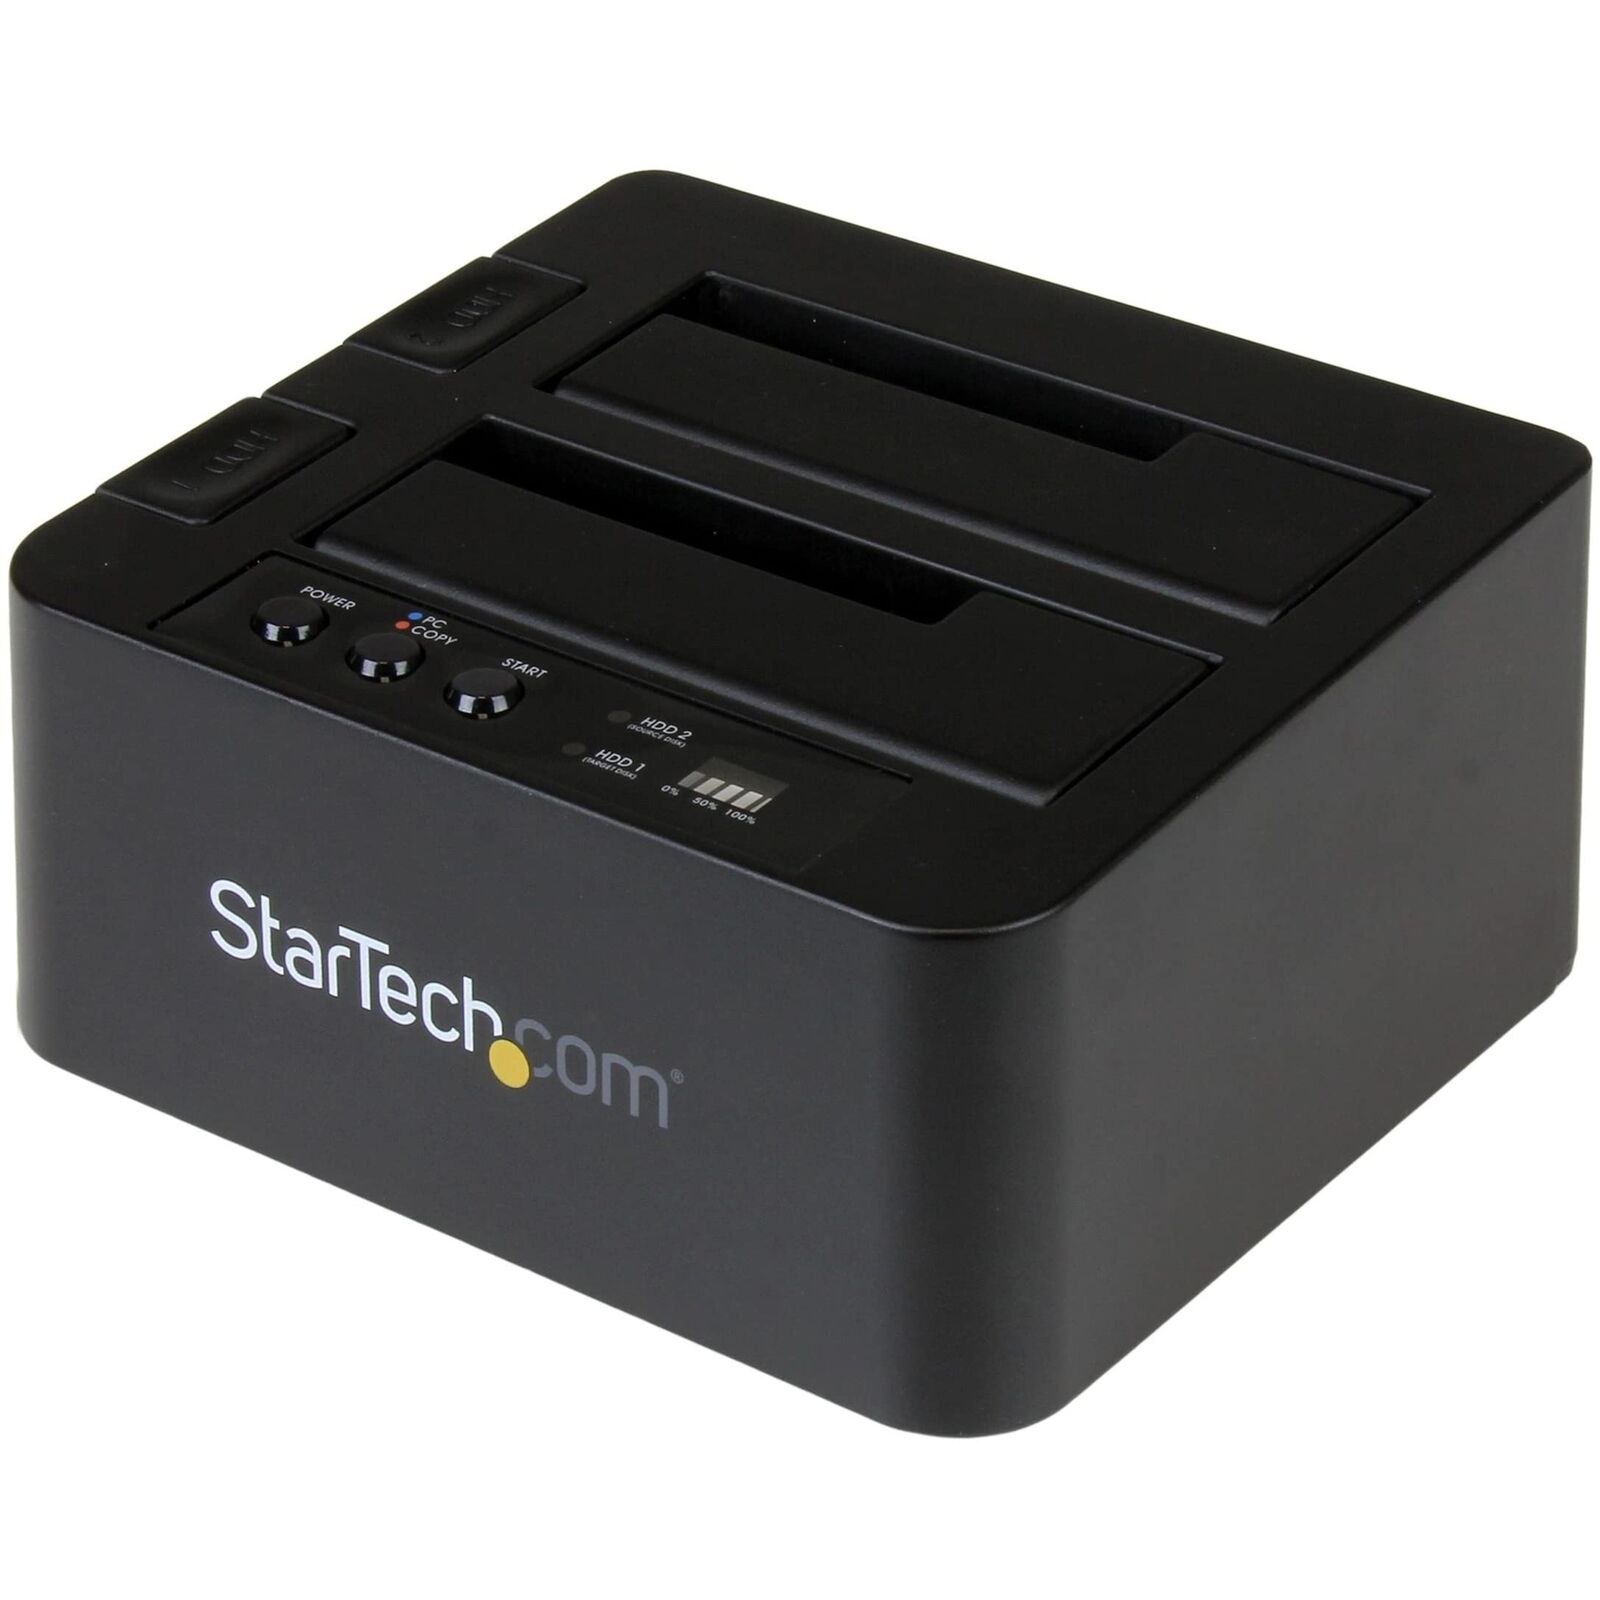 StarTech.com Standalone Hard Drive Duplicator, External Dual Bay HDD/SSD Clon...